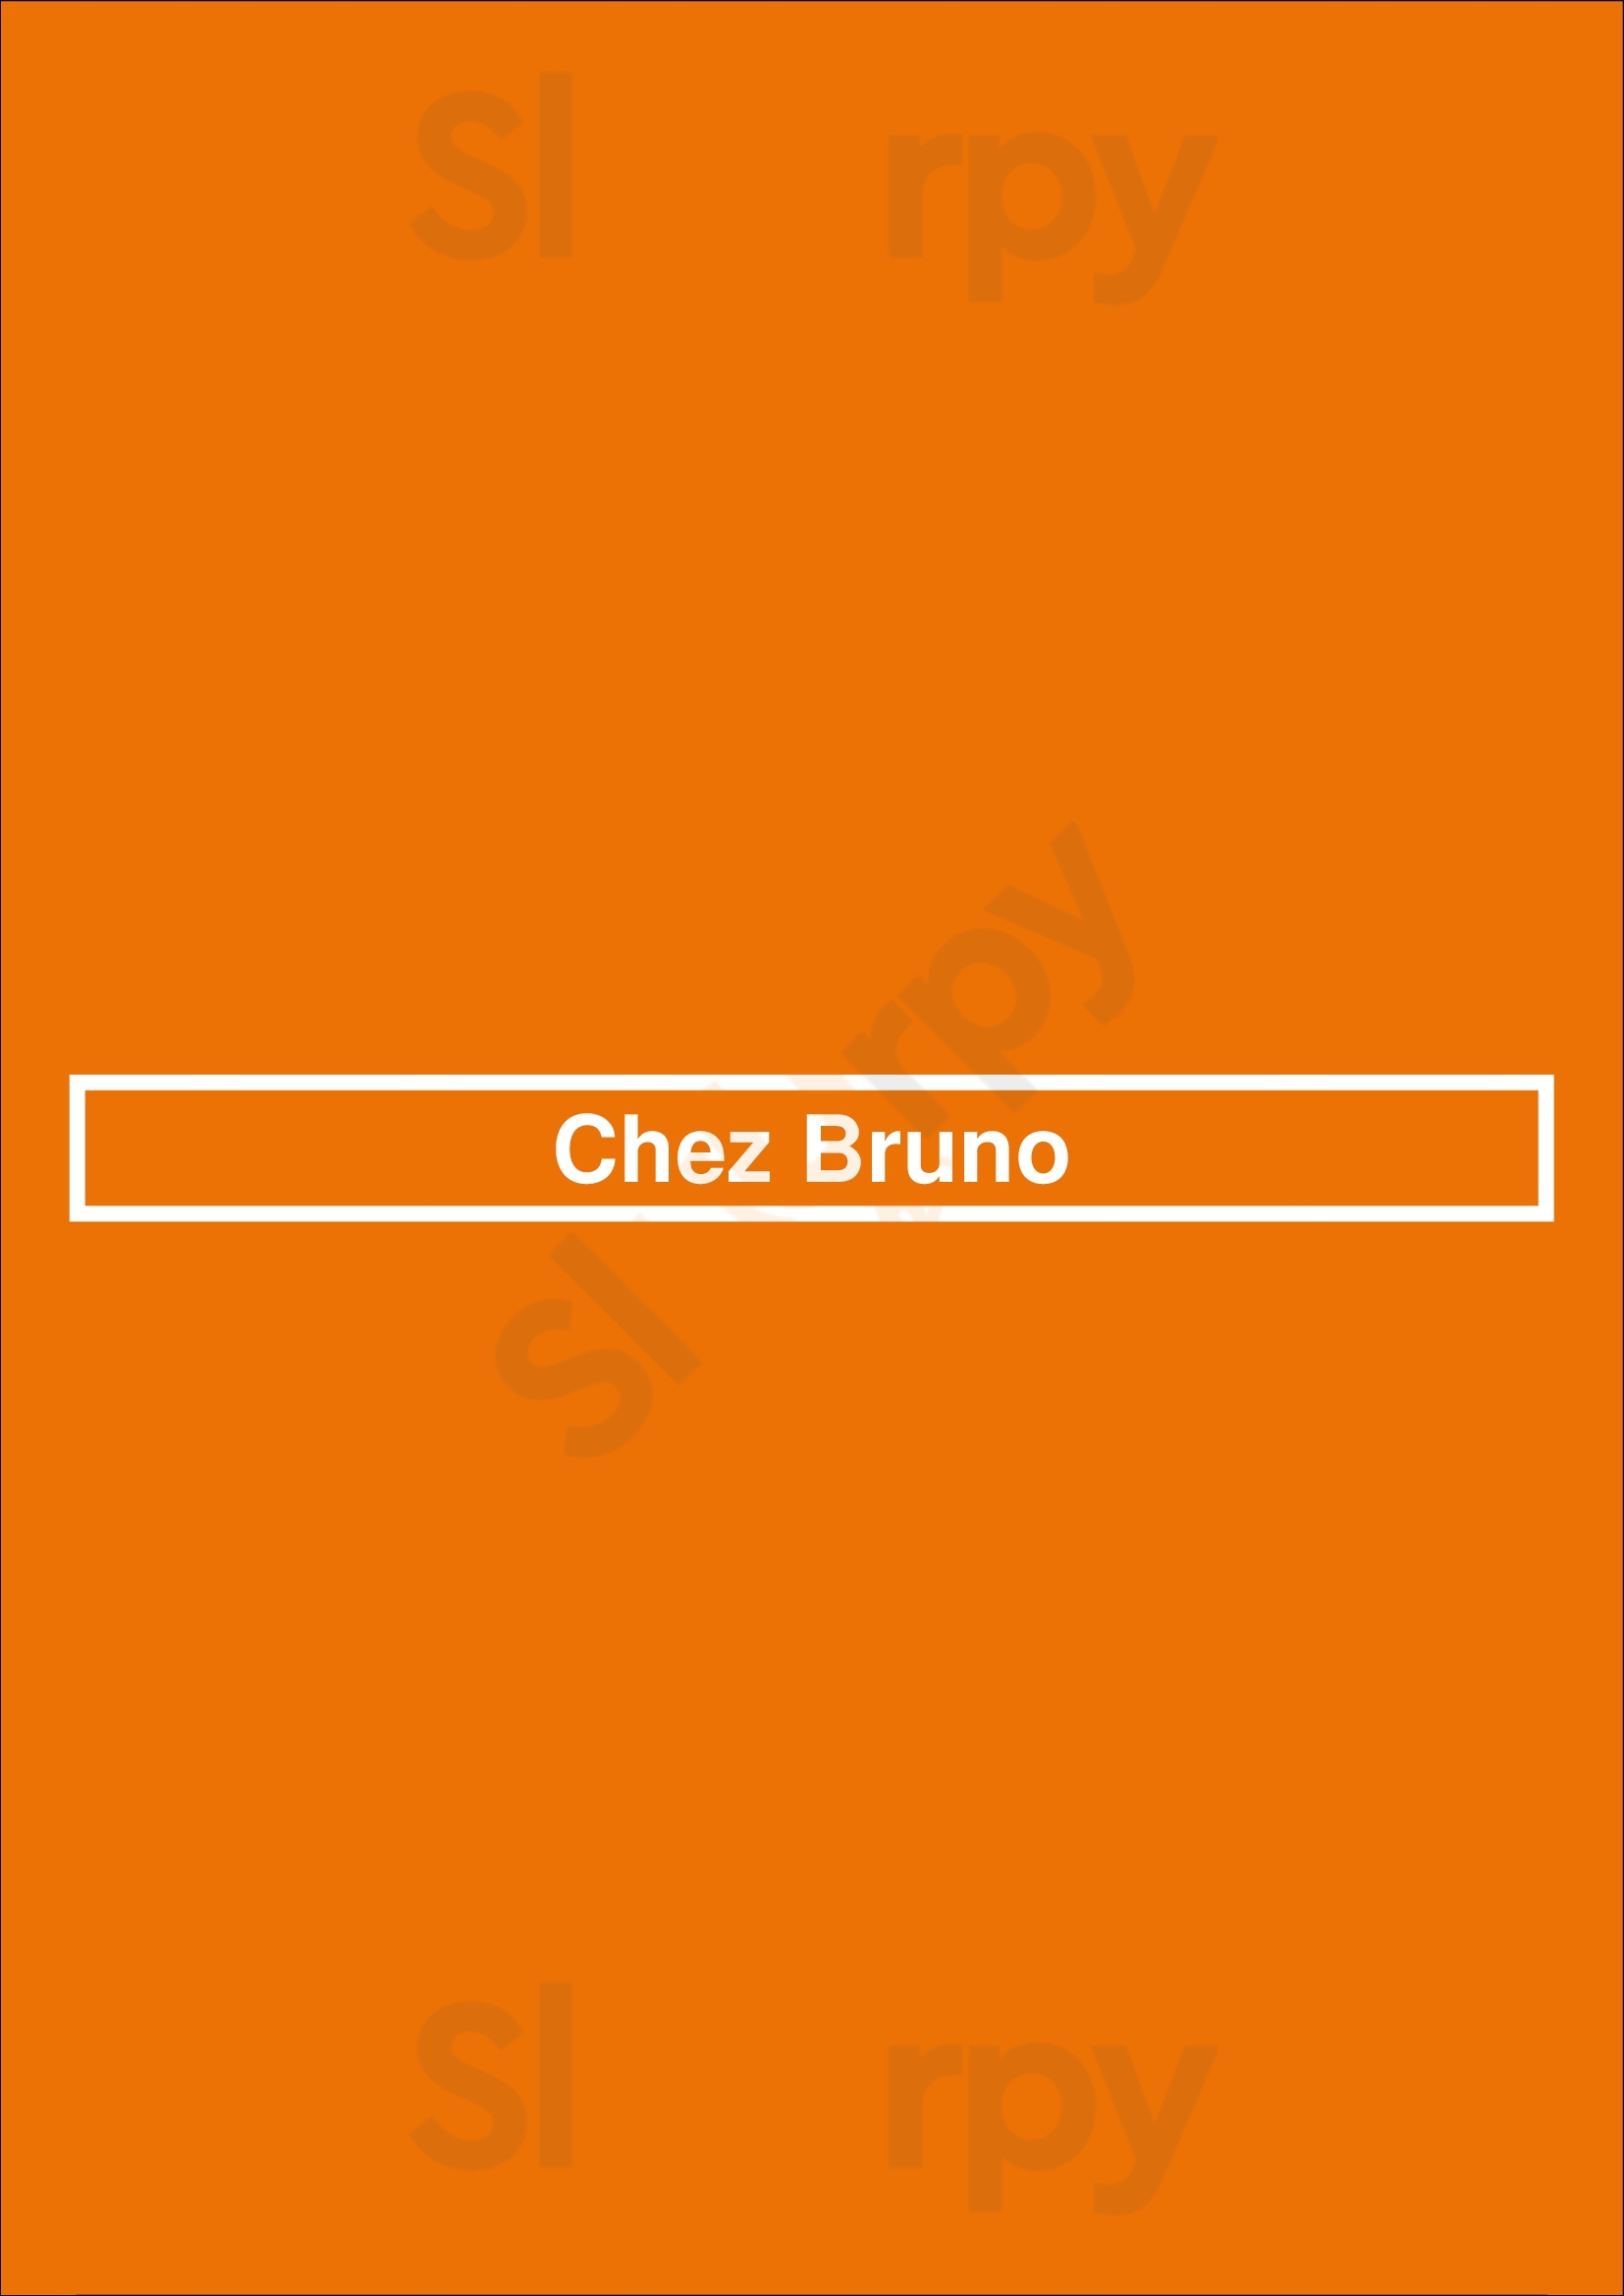 Chez Bruno Bruxelles Menu - 1